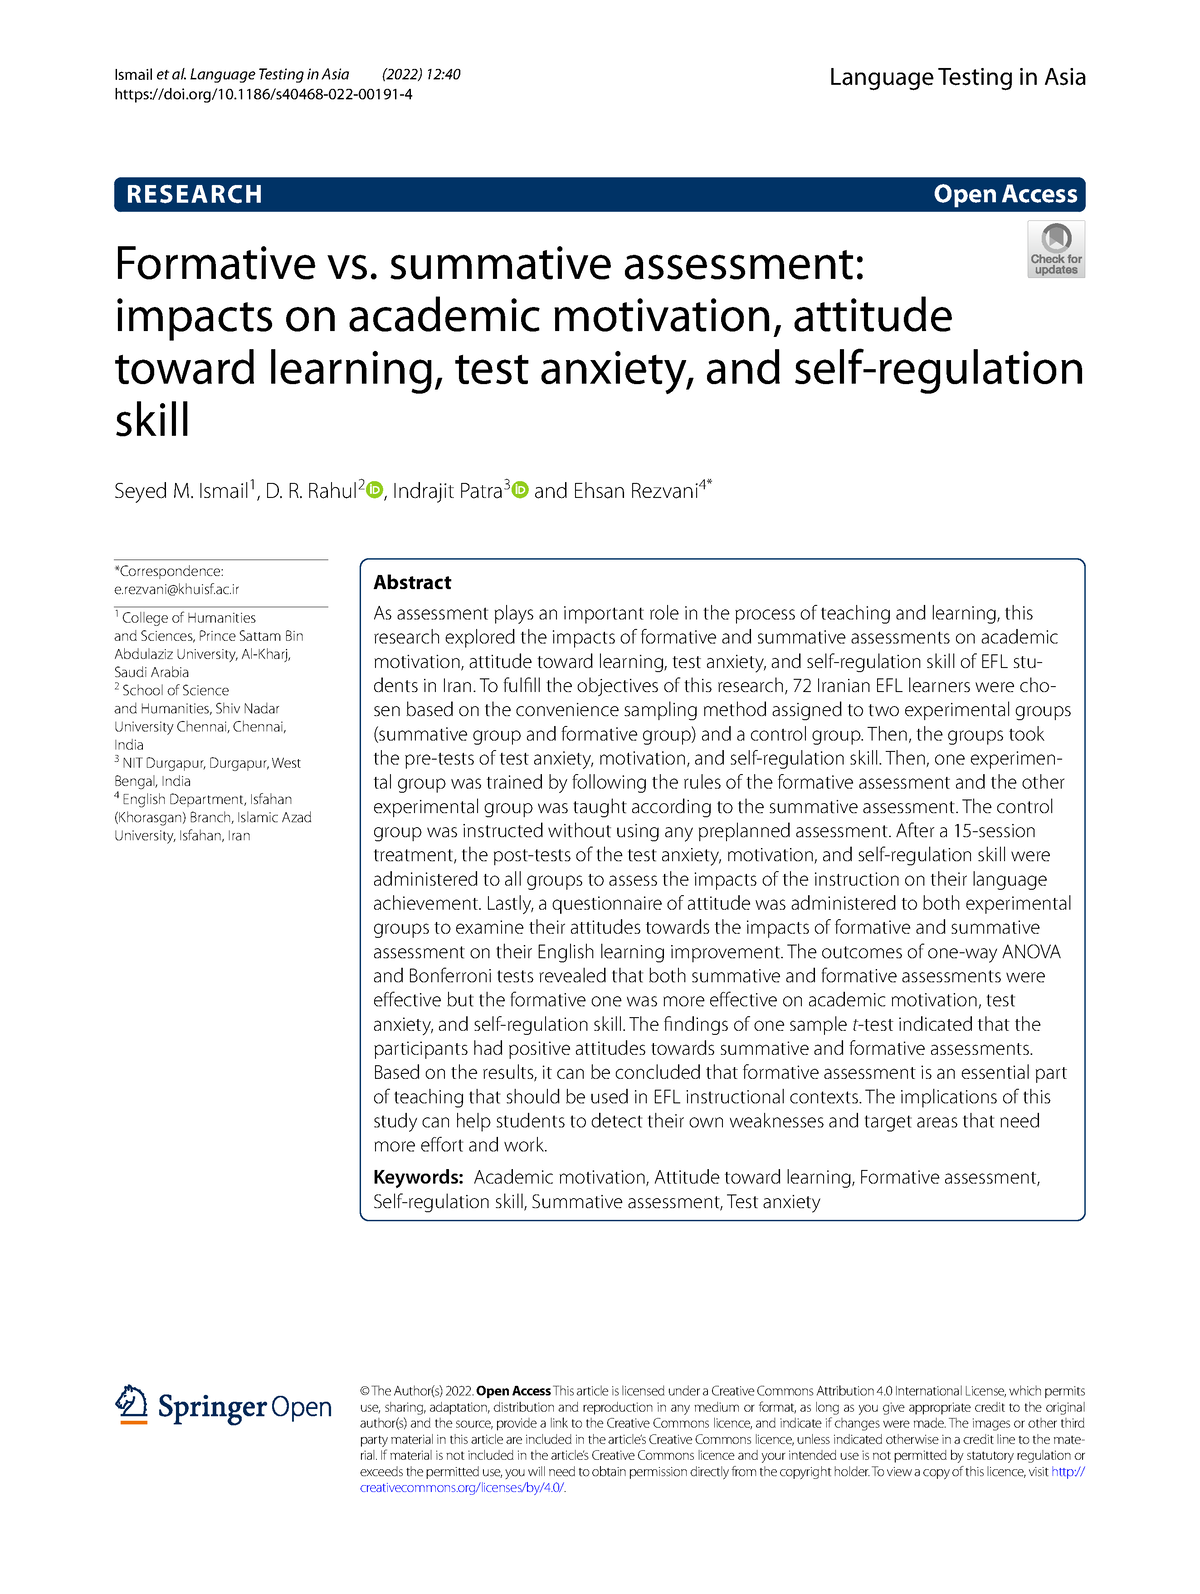 Formative Vs Summative Assessment Formative Vs Summative Assessment Impacts On Academic 3002